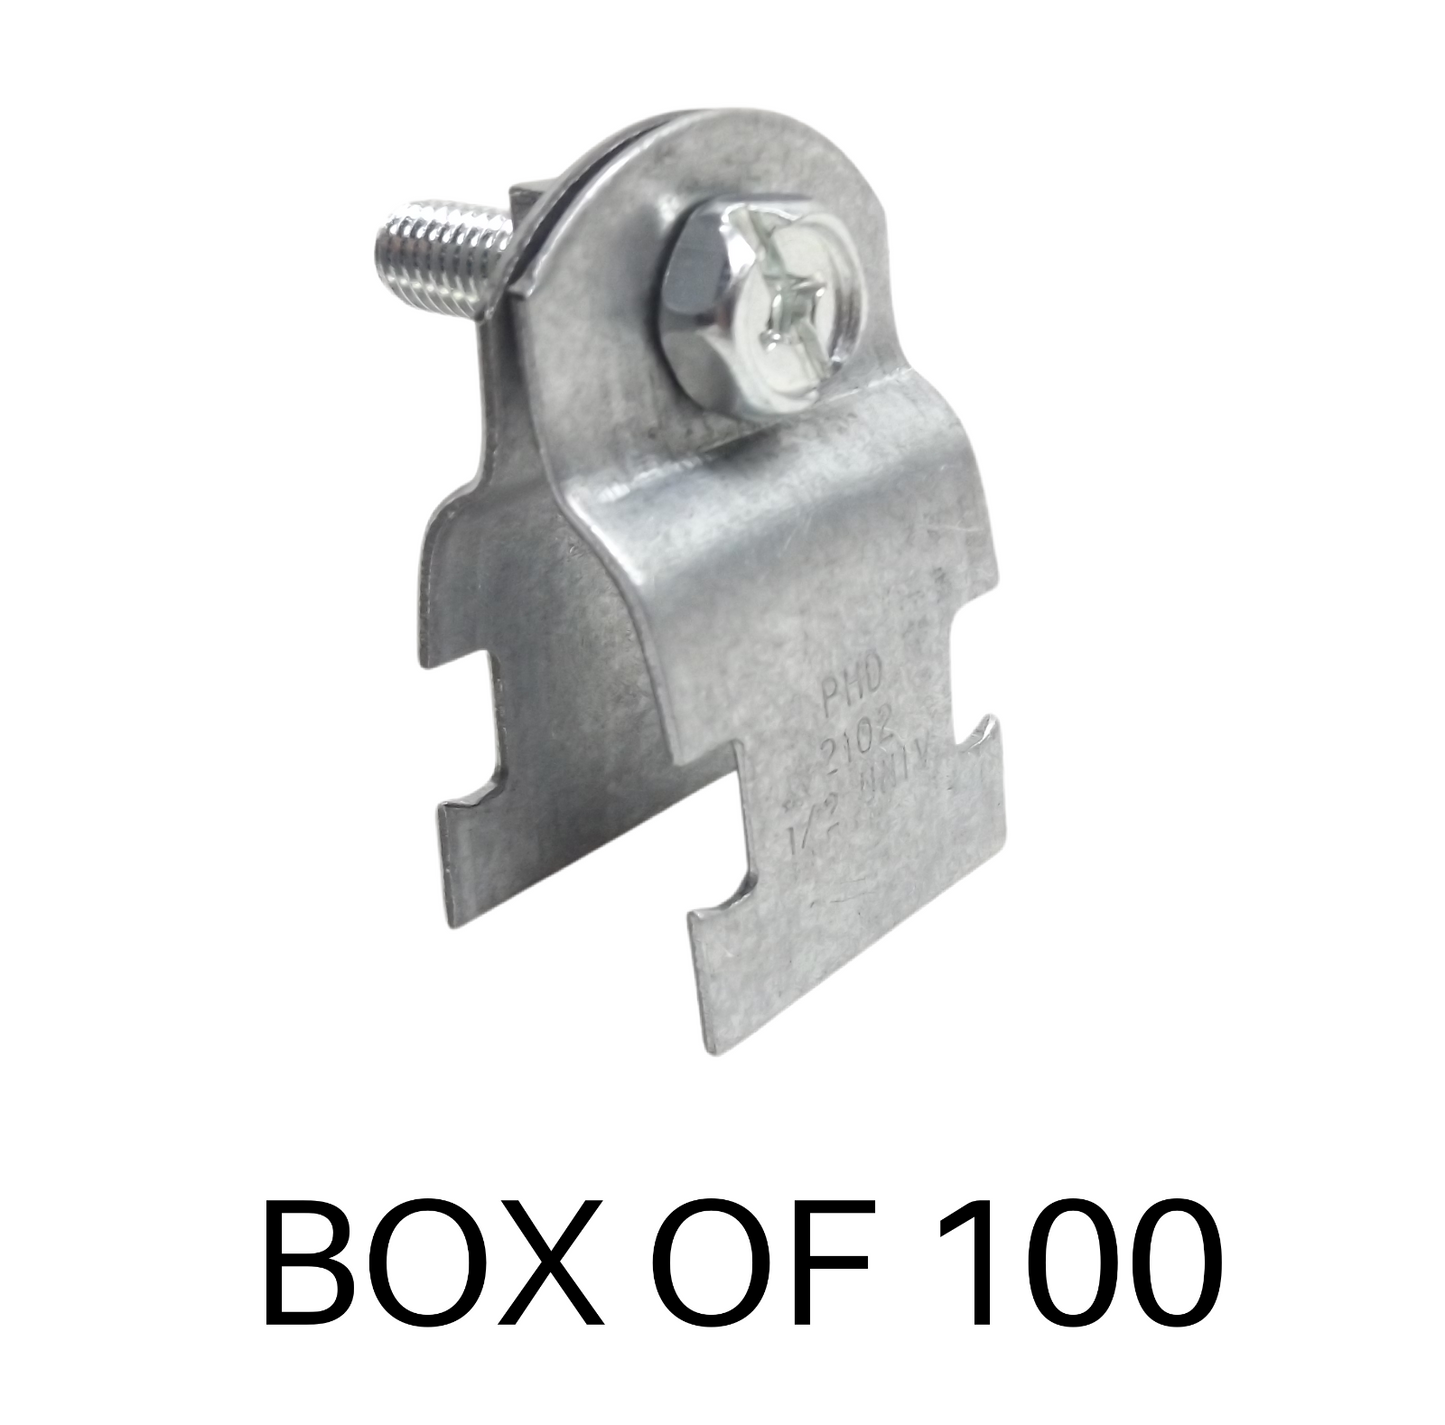 BOX OF 100 PHD 2102 1/2IP UNIVERSAL PIPE CLAMP